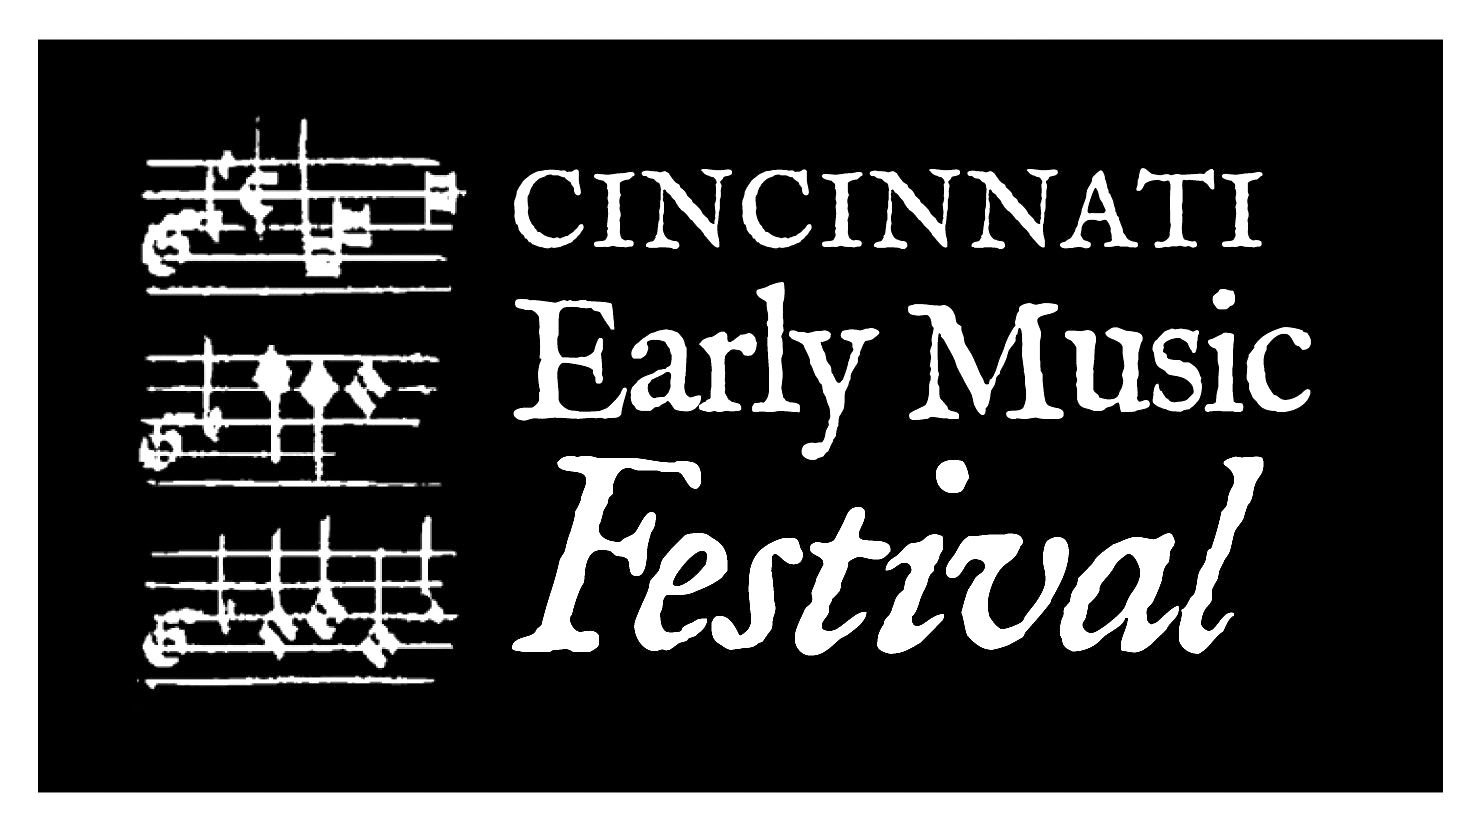 Cincinnati Early Music Festival